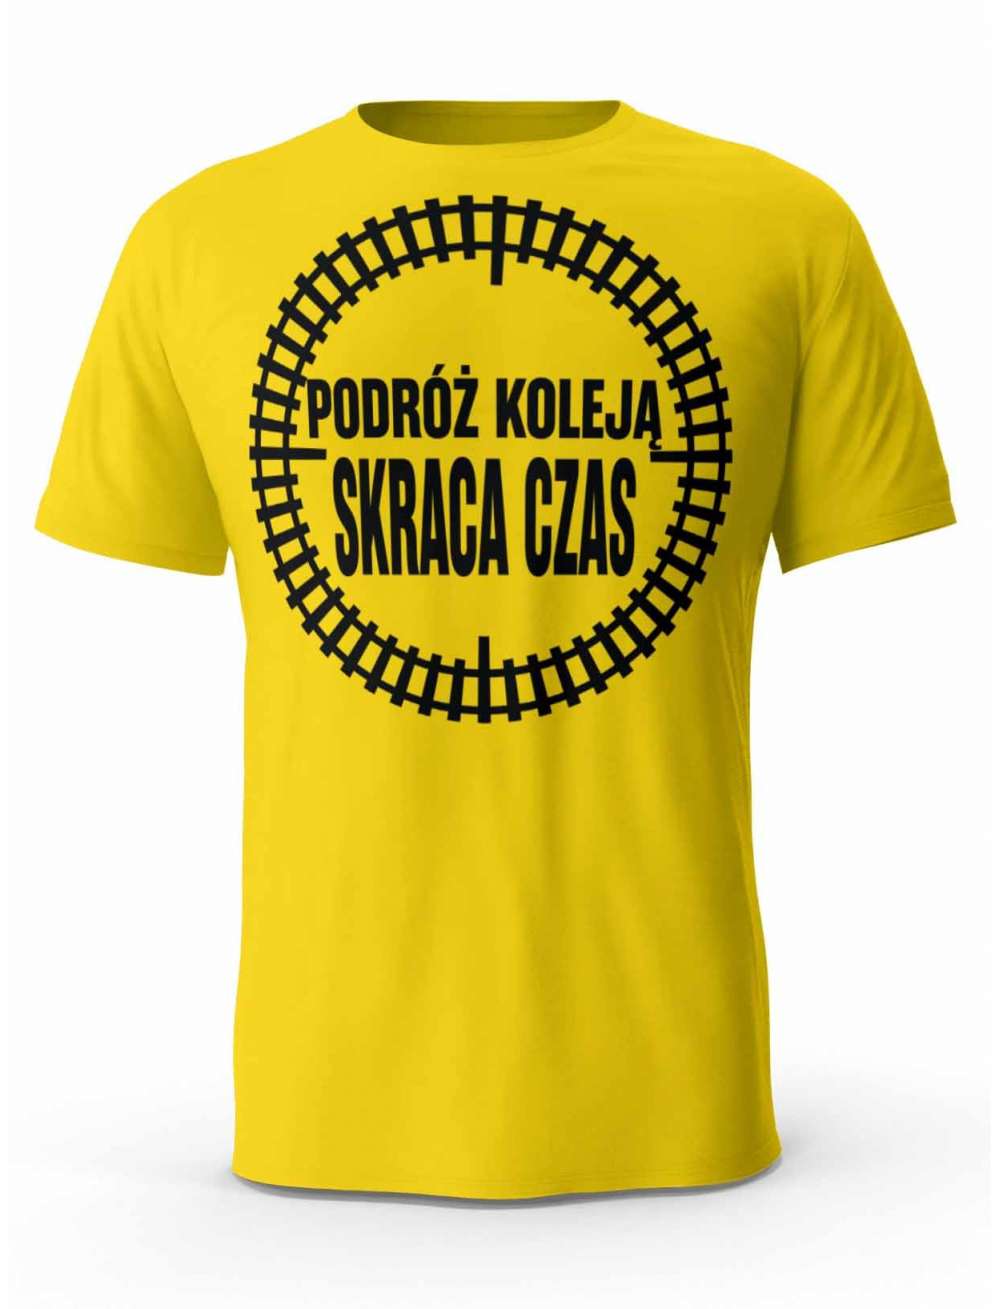 Koszulka Podróż Koleją Skraca Czas, T-shirt Męski, Prezent